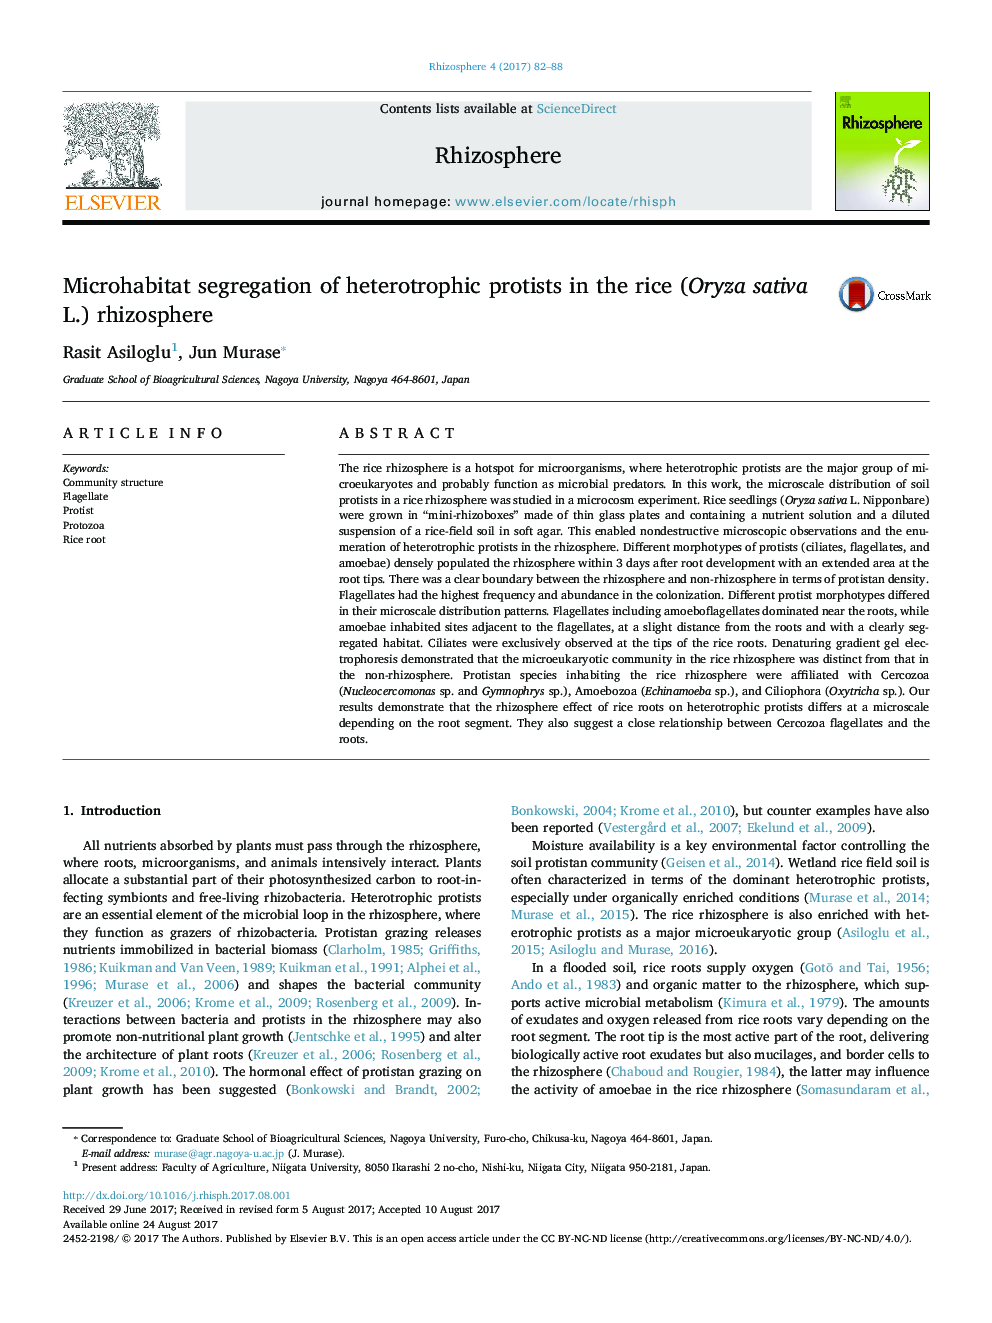 Microhabitat segregation of heterotrophic protists in the rice (Oryza sativa L.) rhizosphere